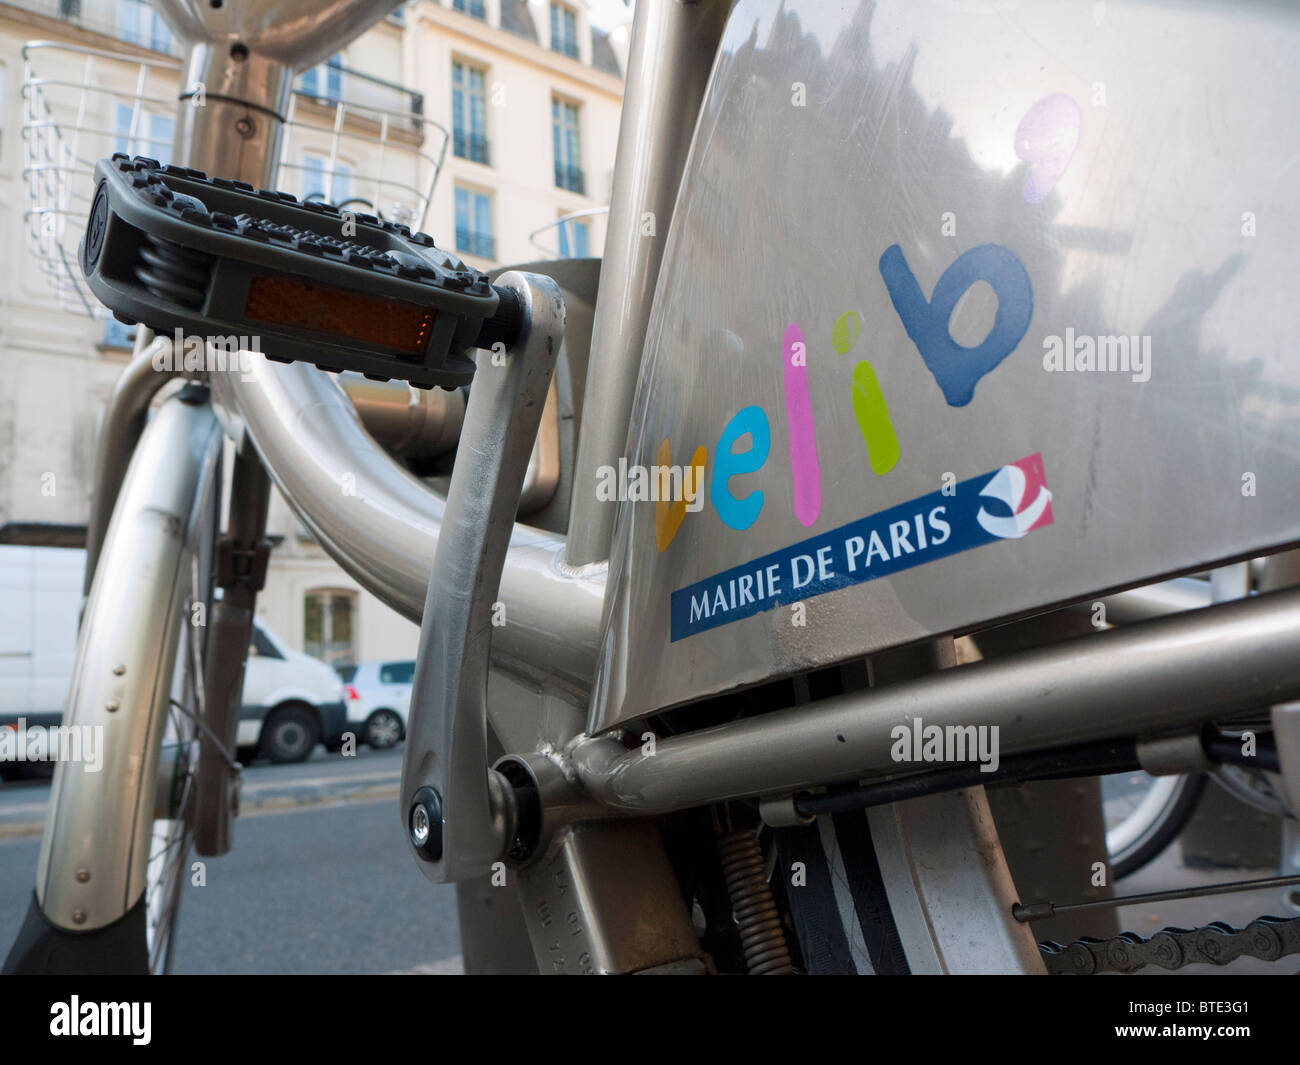 public rental bicycles called Velibon Paris street in France Stock Photo